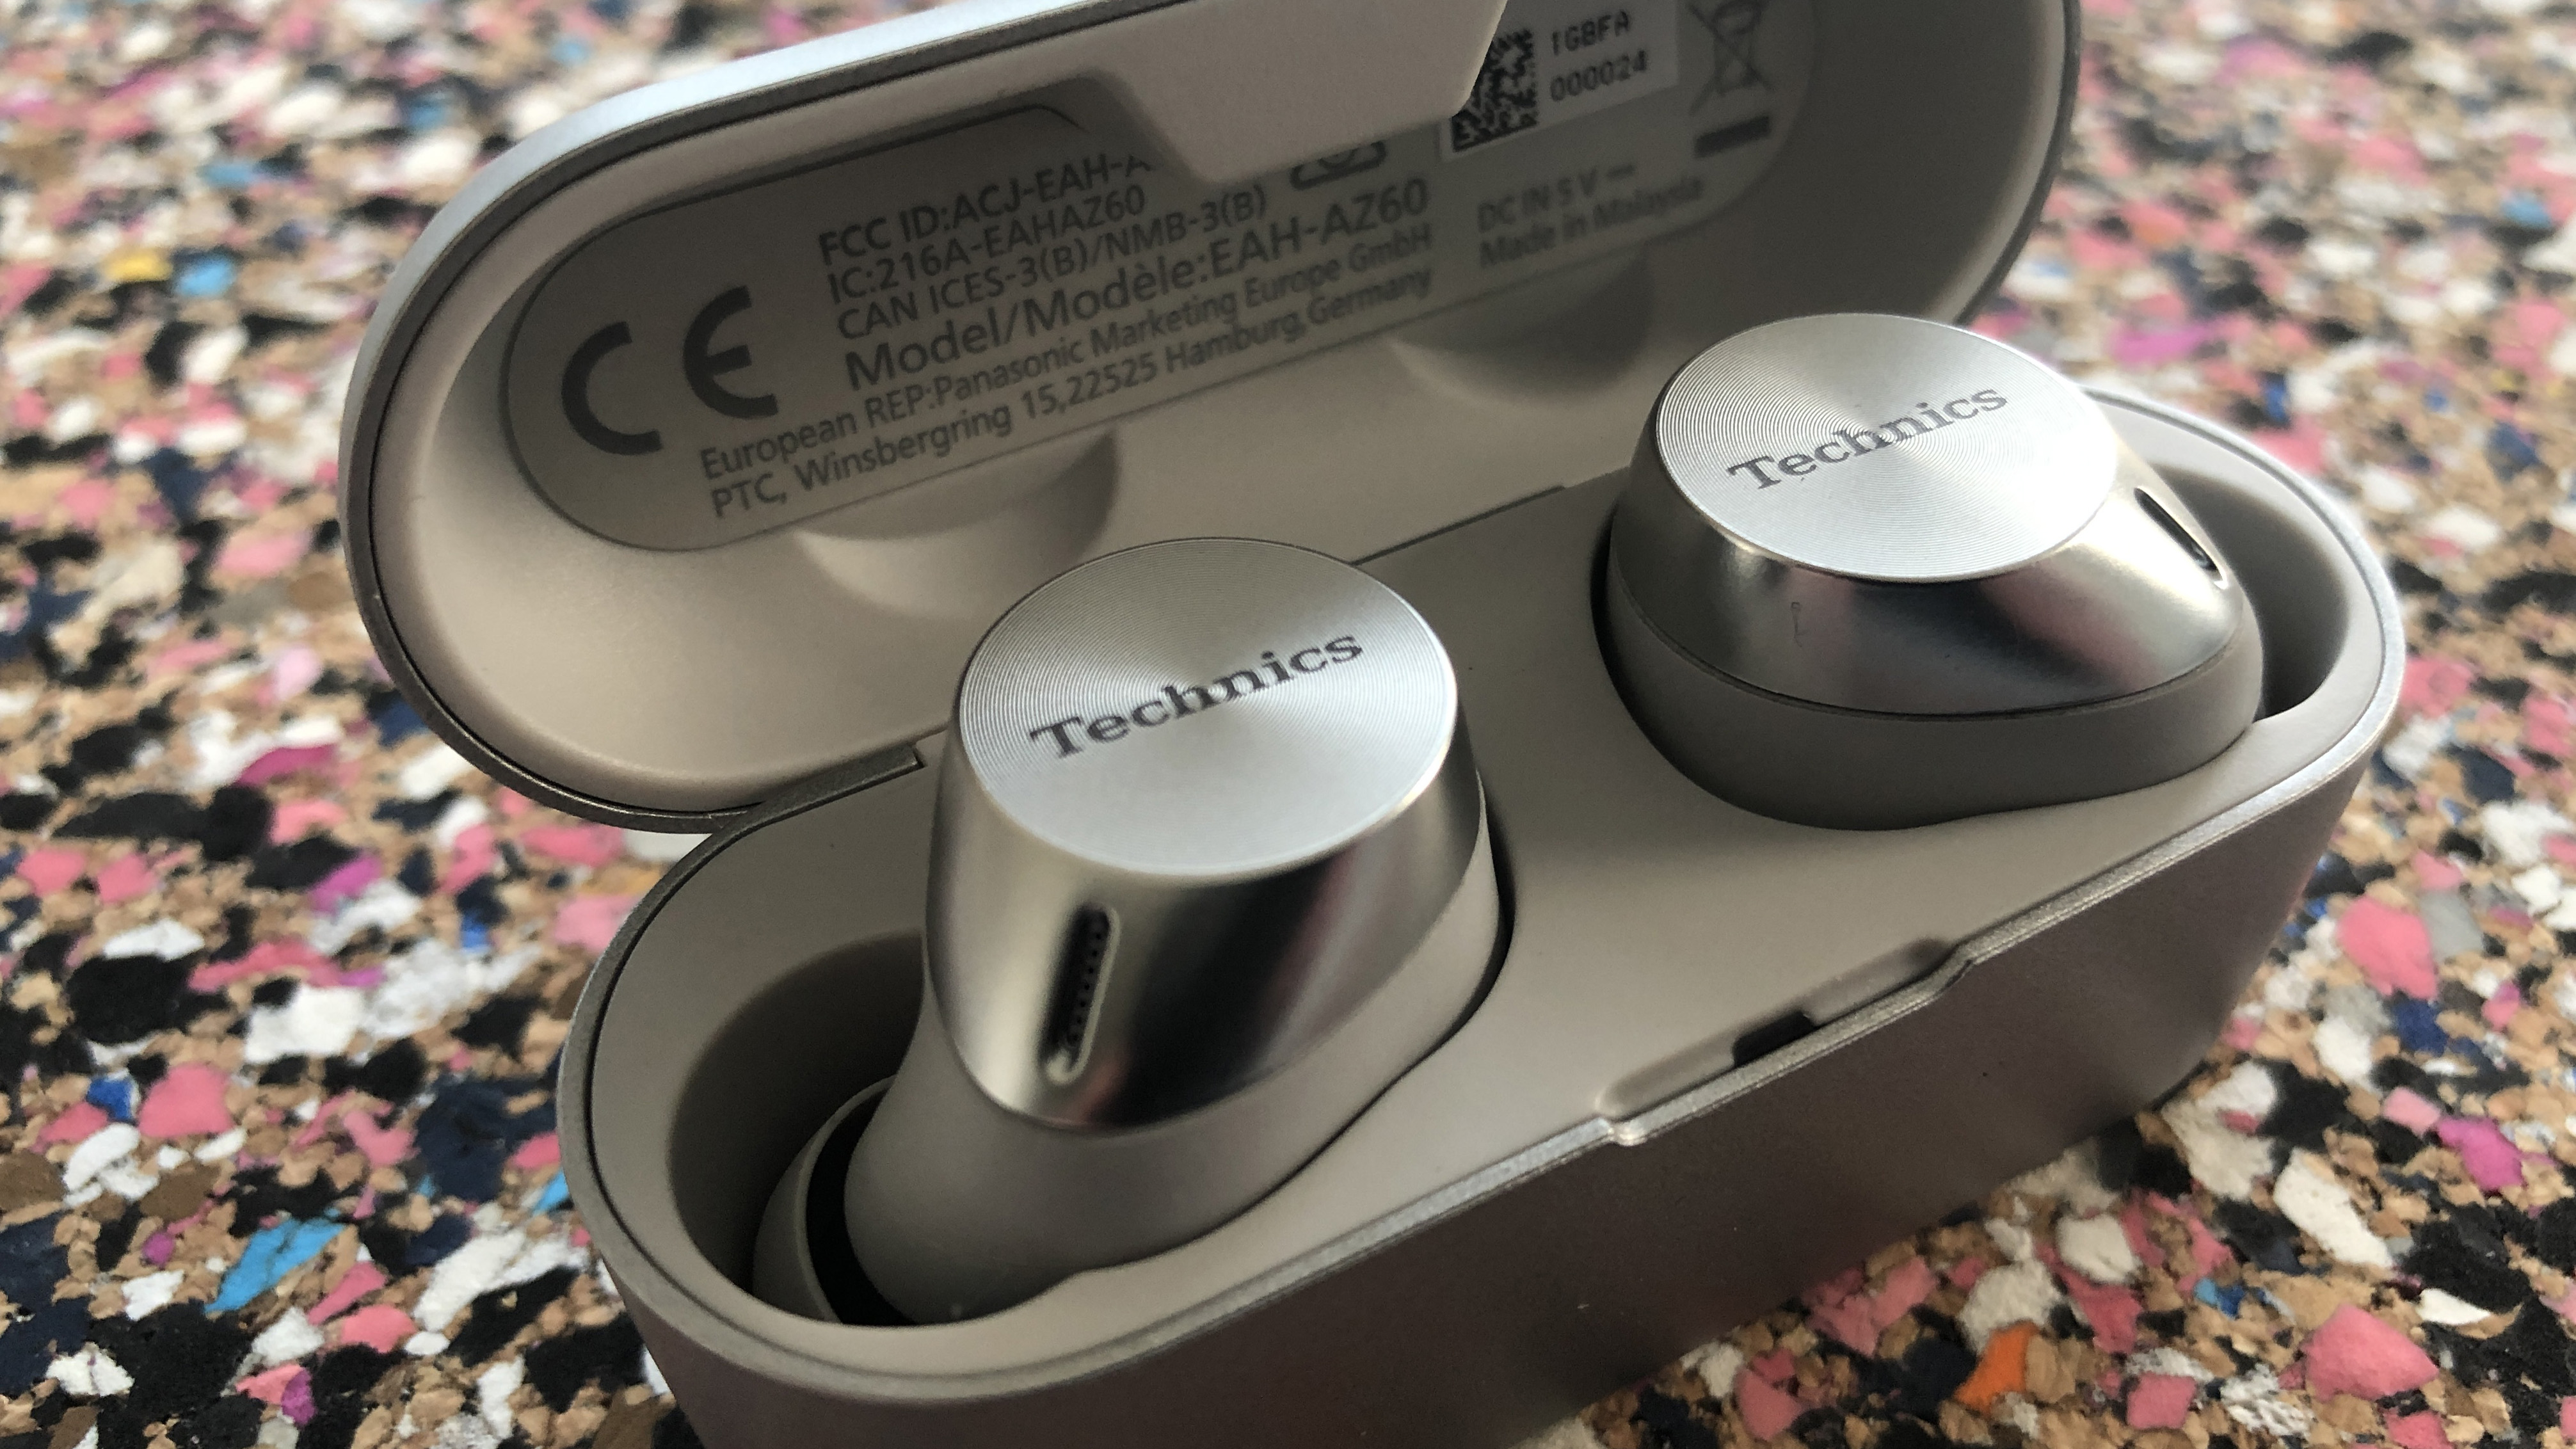 the technics eah-az60 true wireless earbuds in their charging case